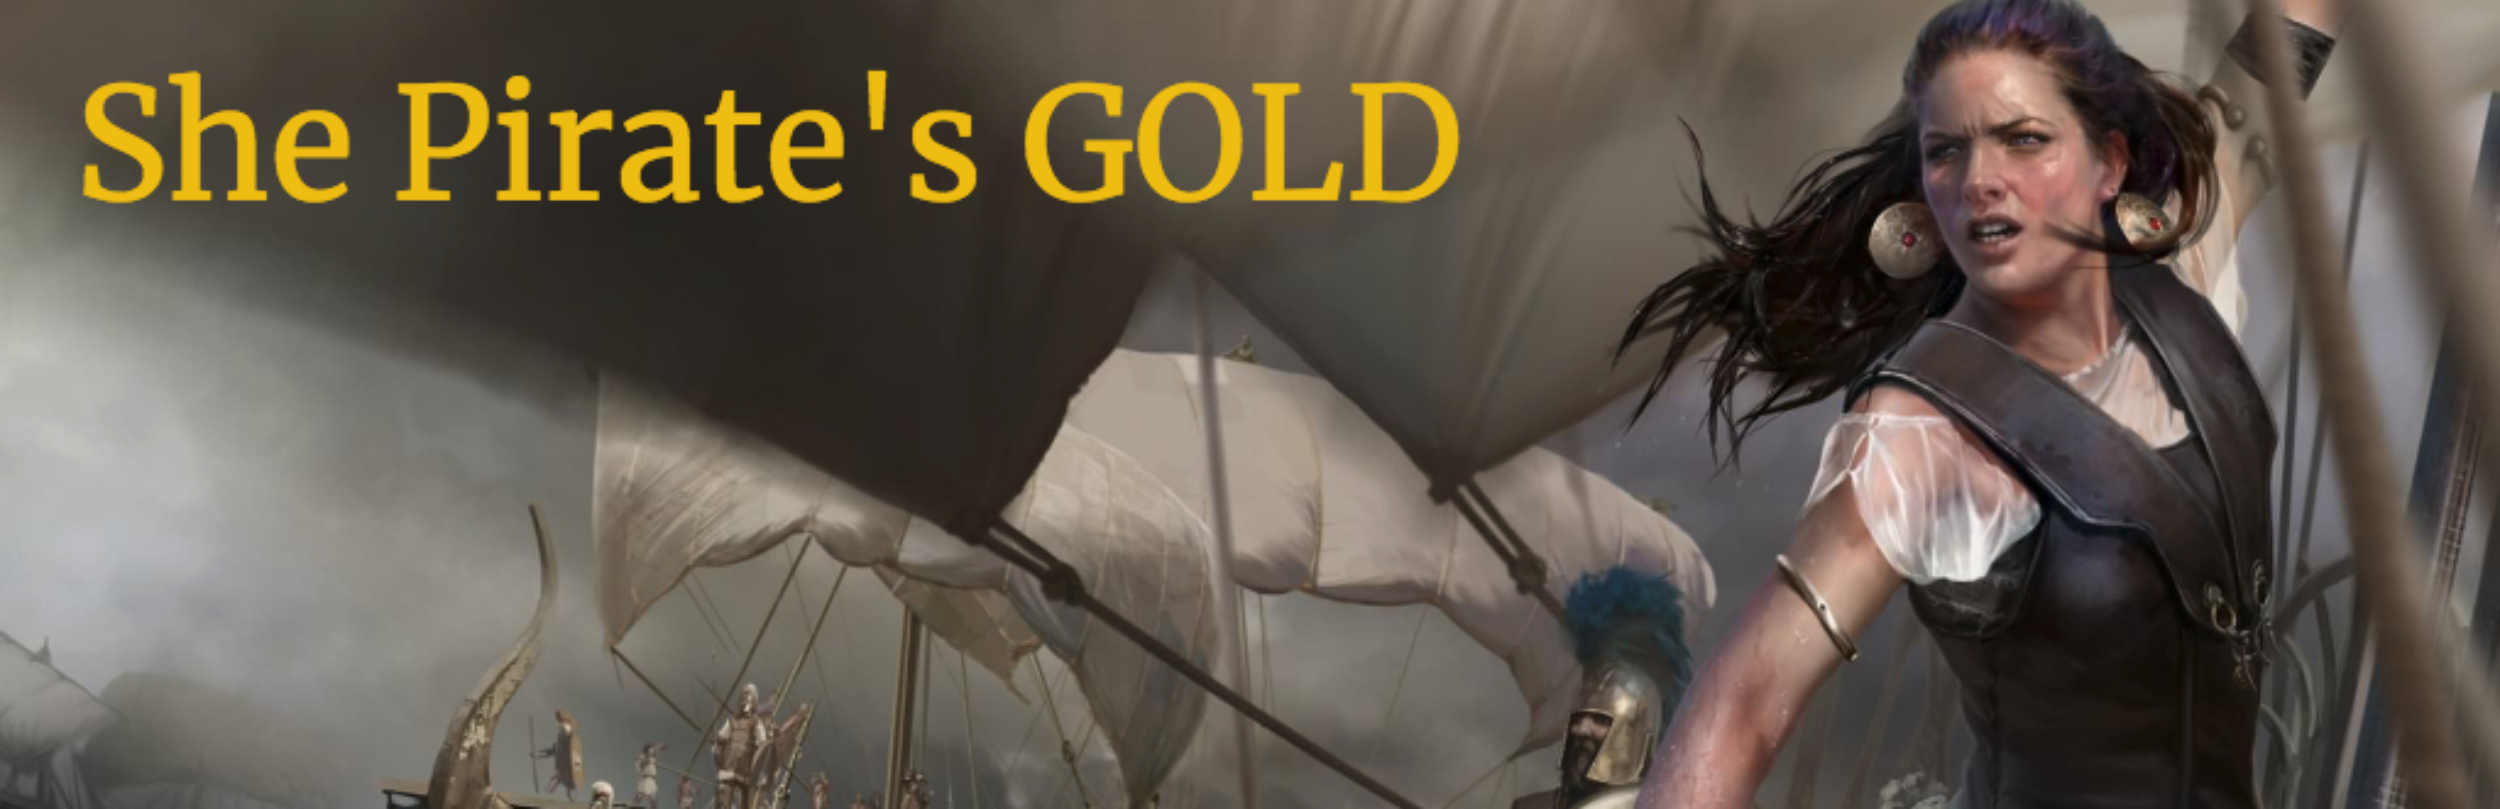 She Pirate's Gold